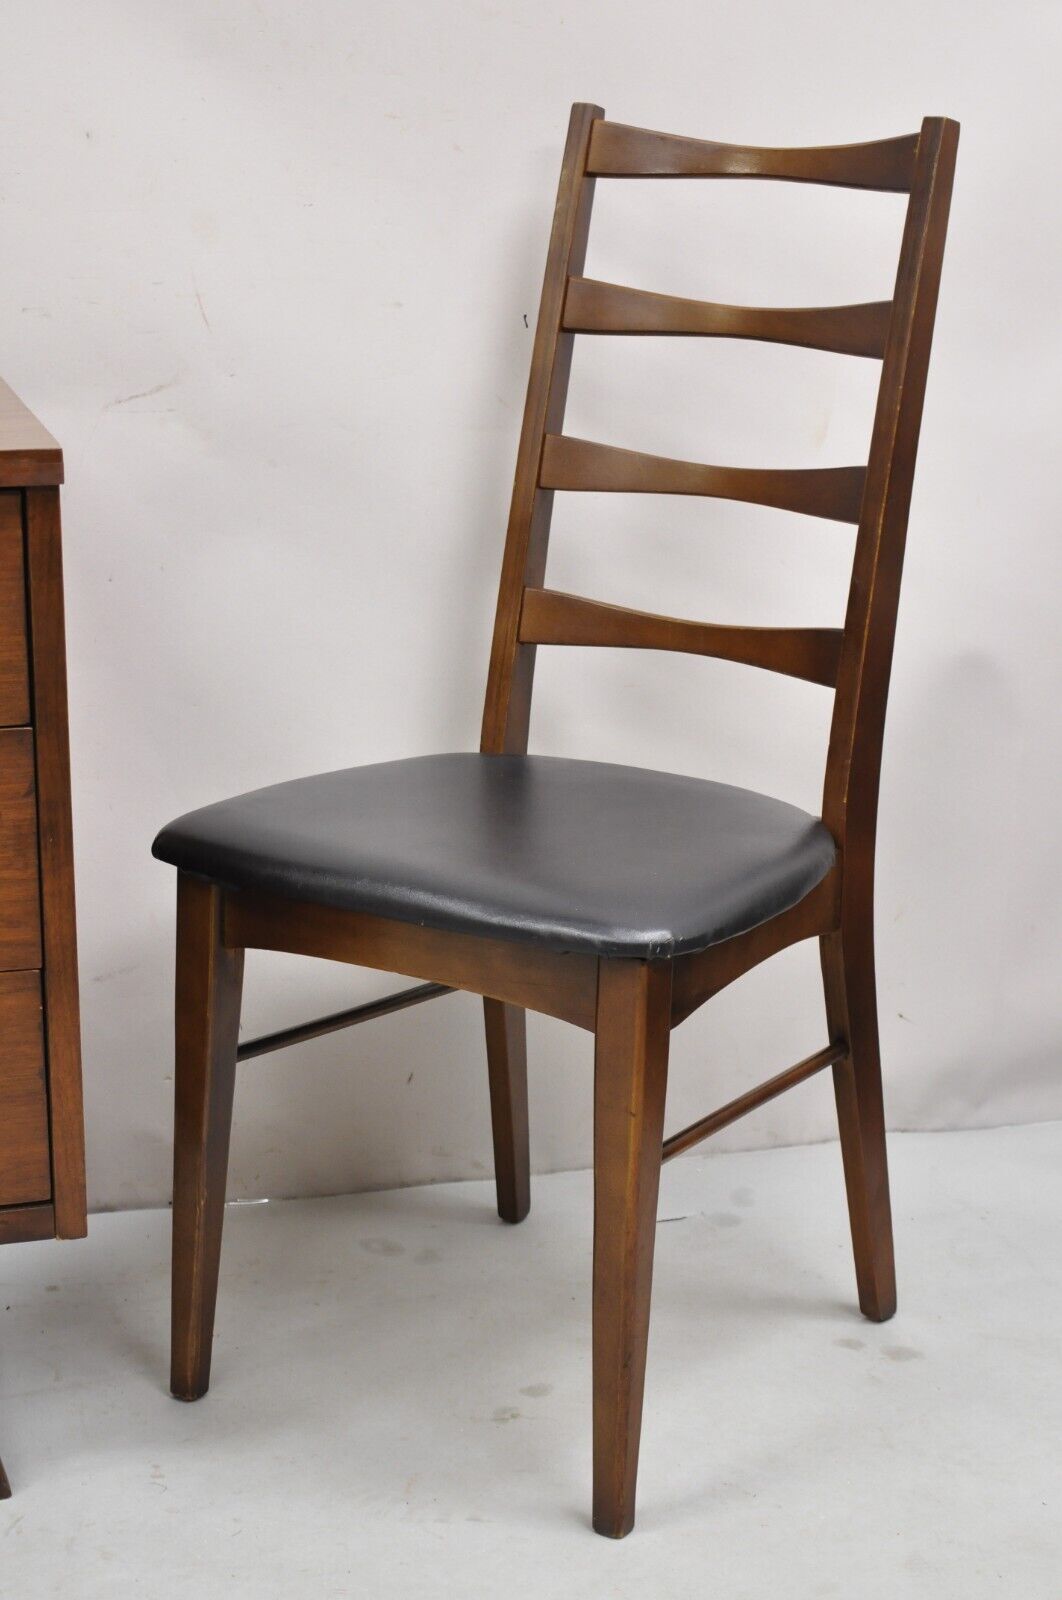 Vintage Mid Century Modern Walnut Sculpted Legs Kneehole Desk & Chair - 2 Pc Set